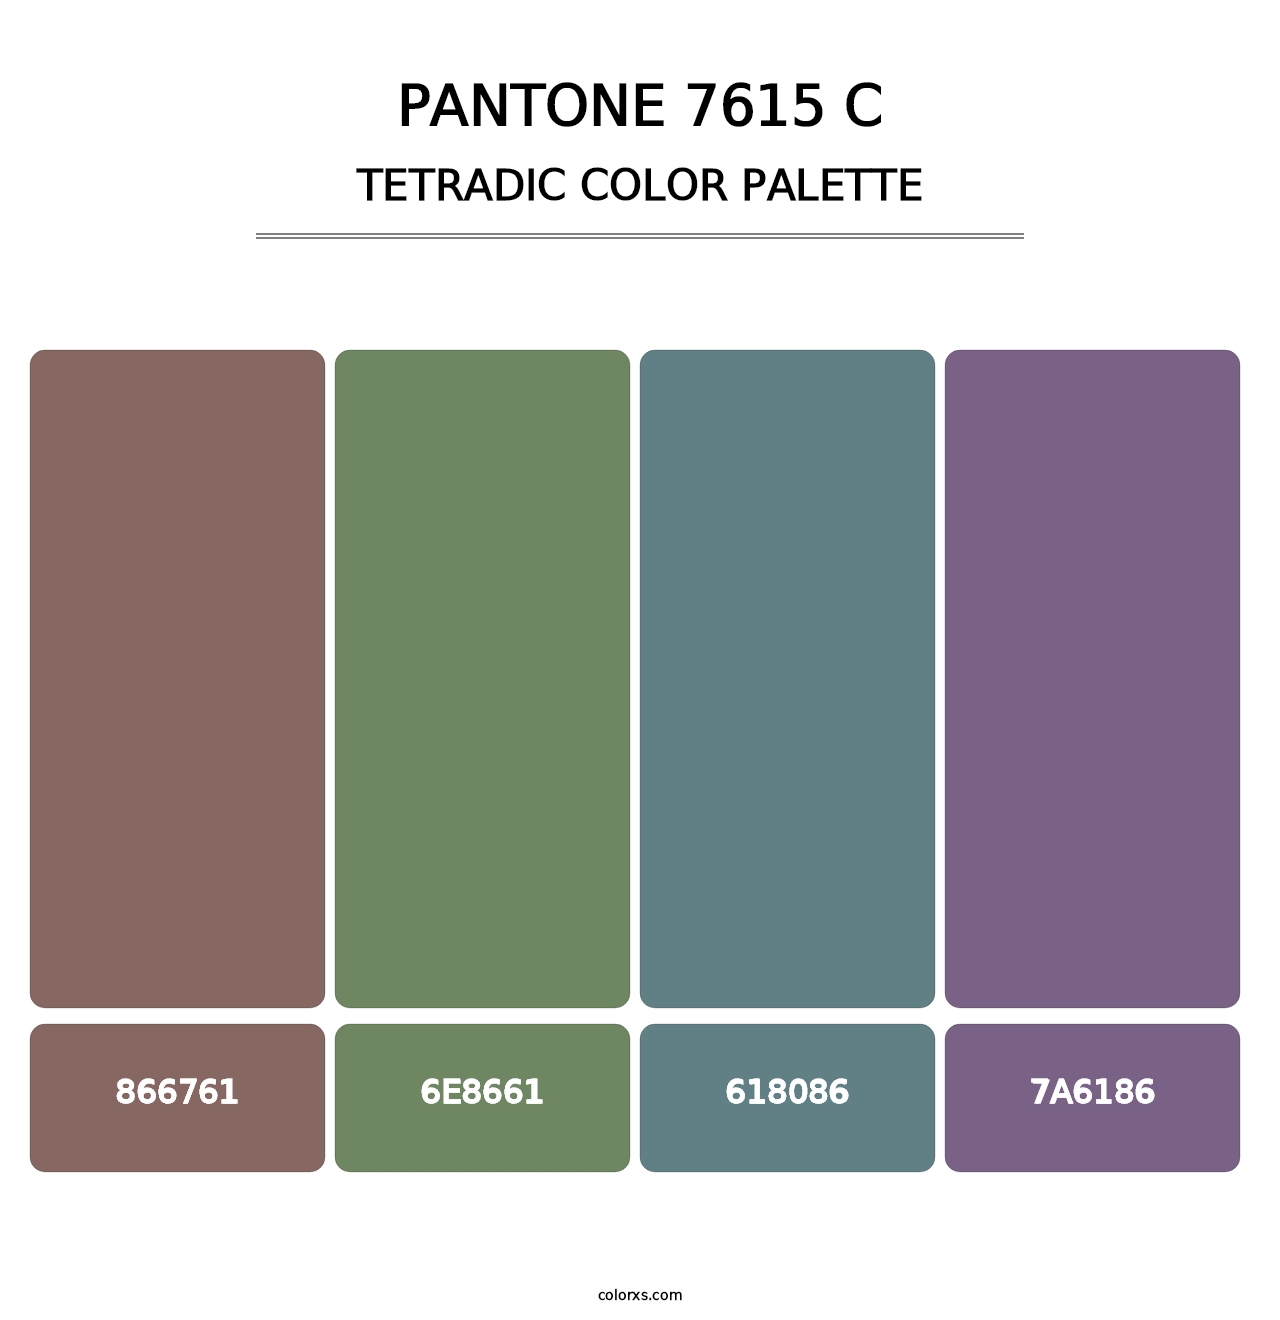 PANTONE 7615 C - Tetradic Color Palette